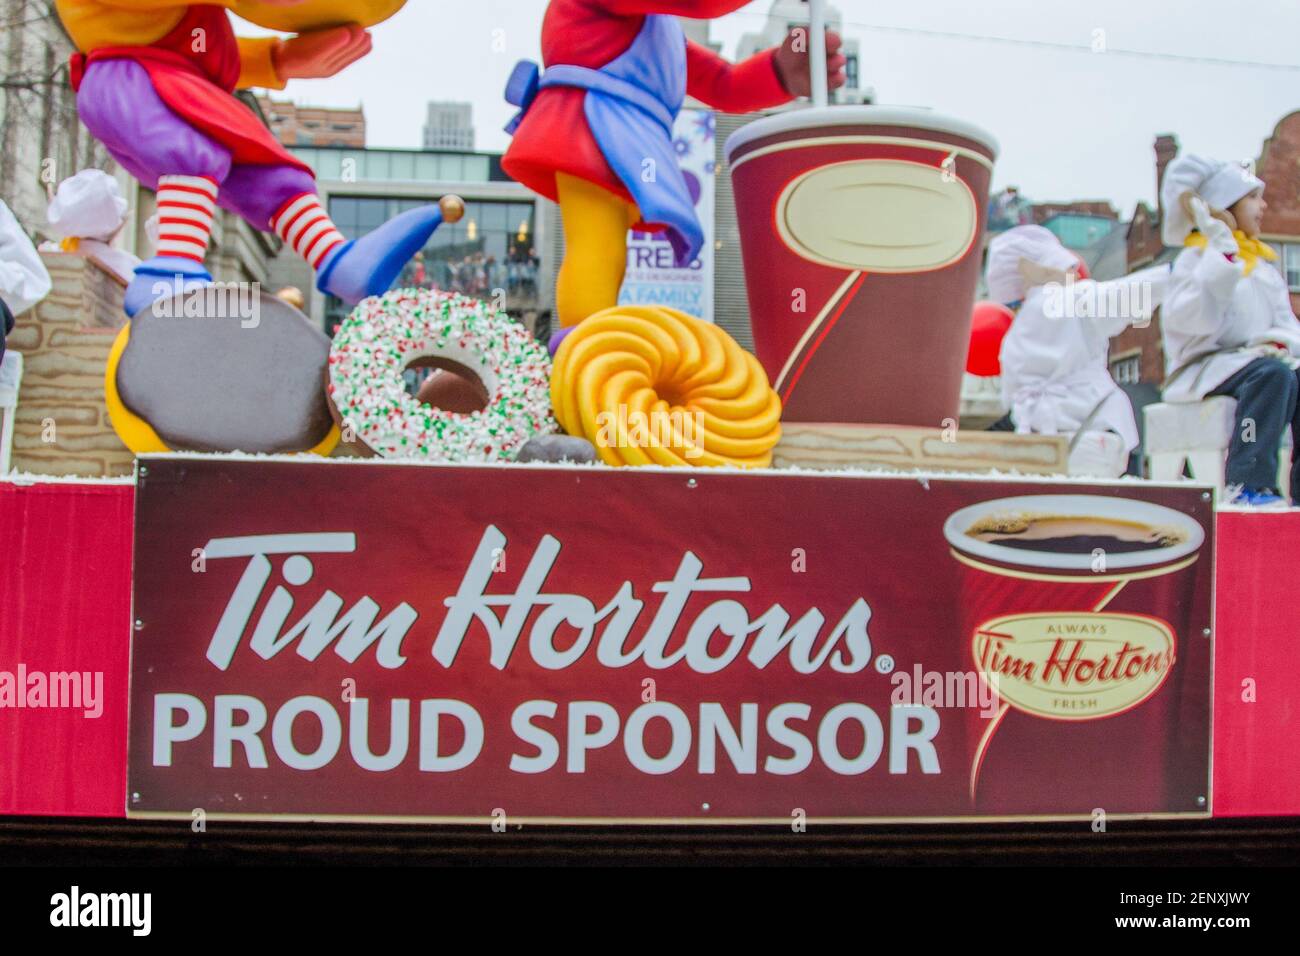 Tim Hortons Celebrates 50-Years Fresh